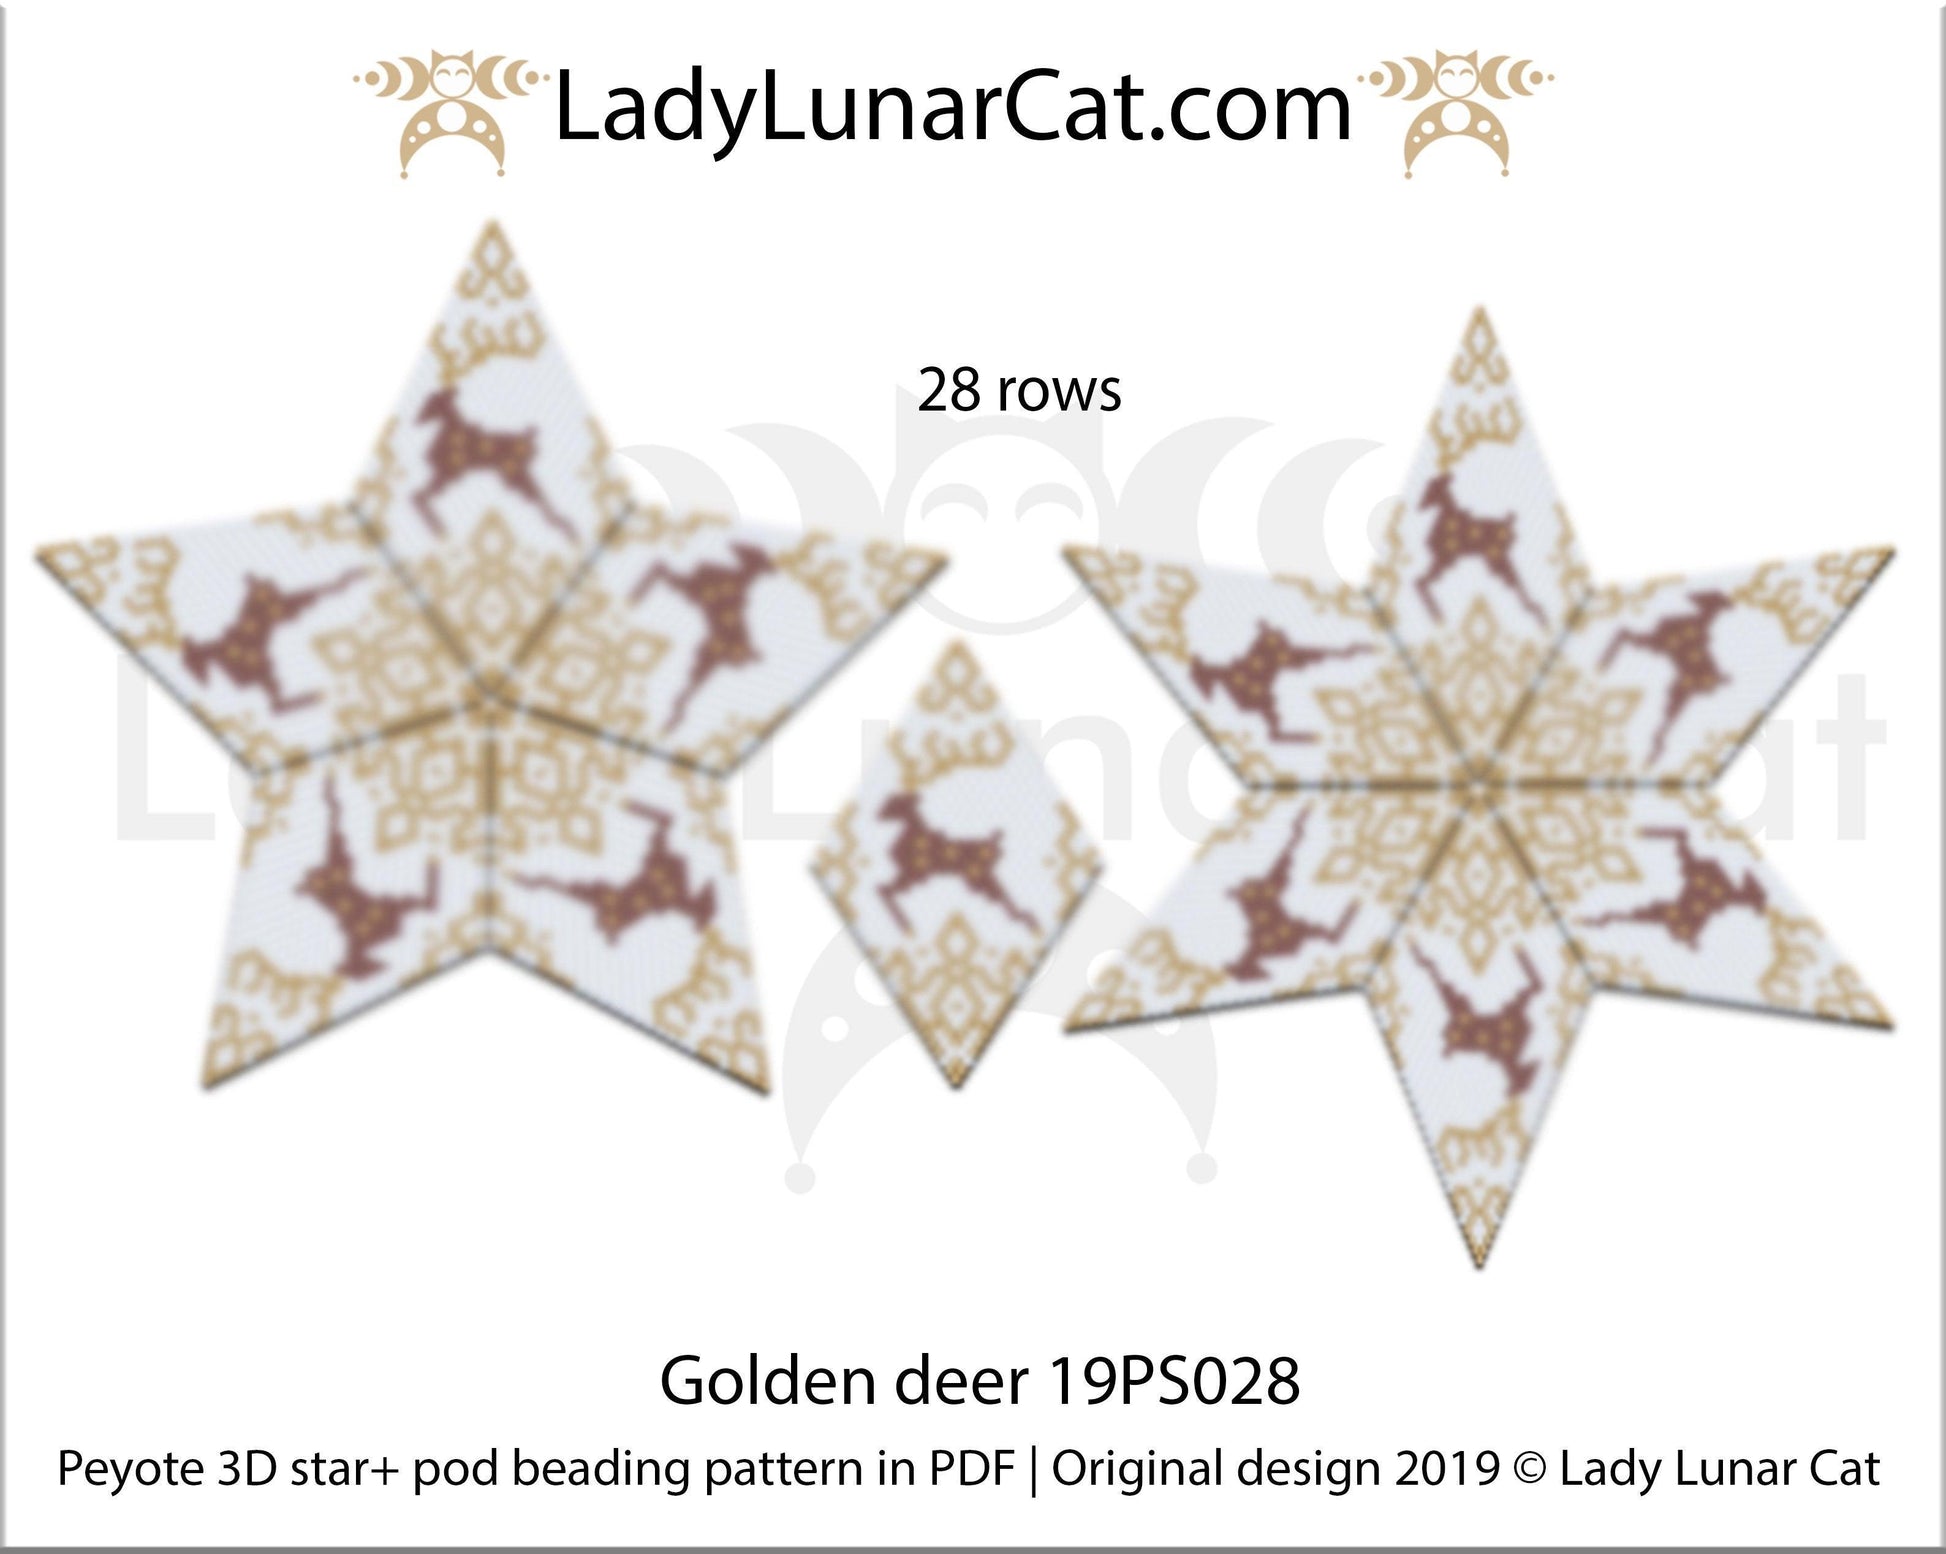 Peyote star patterns for beading and peyote pod patterns Golden deer 19PS028 LadyLunarCat